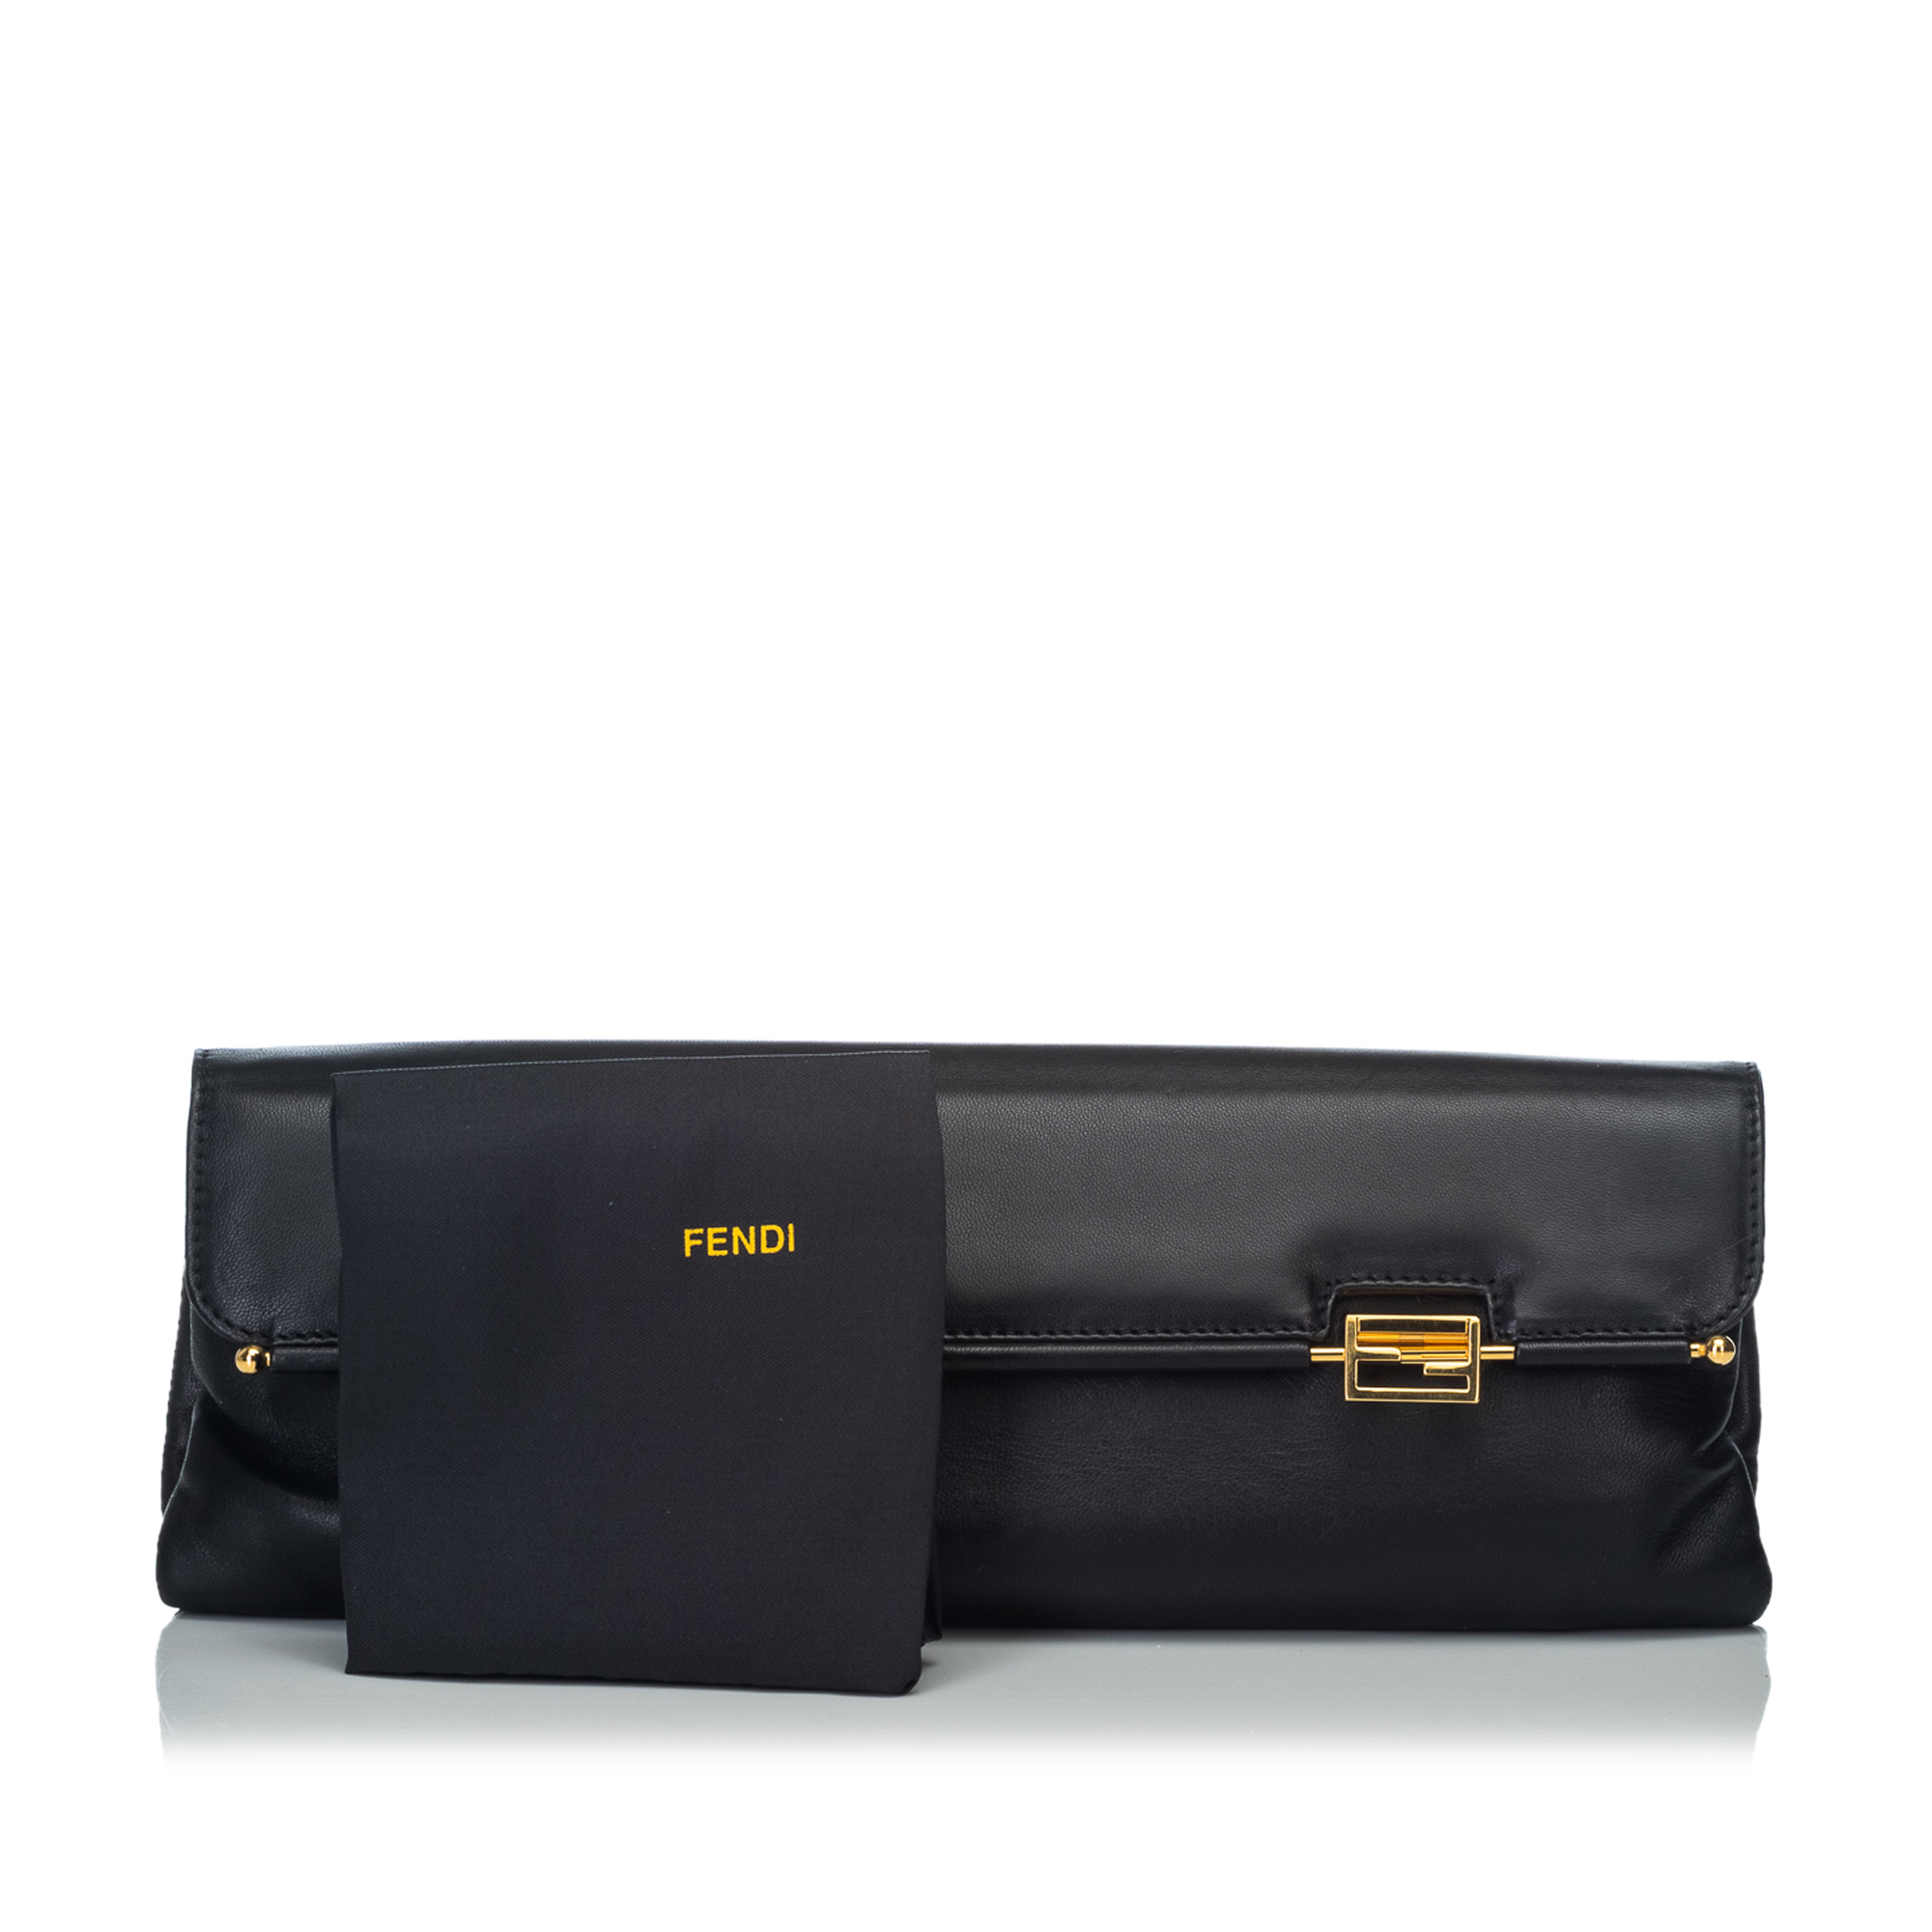 Fendi Leather Clutch Bag - Image 3 of 11